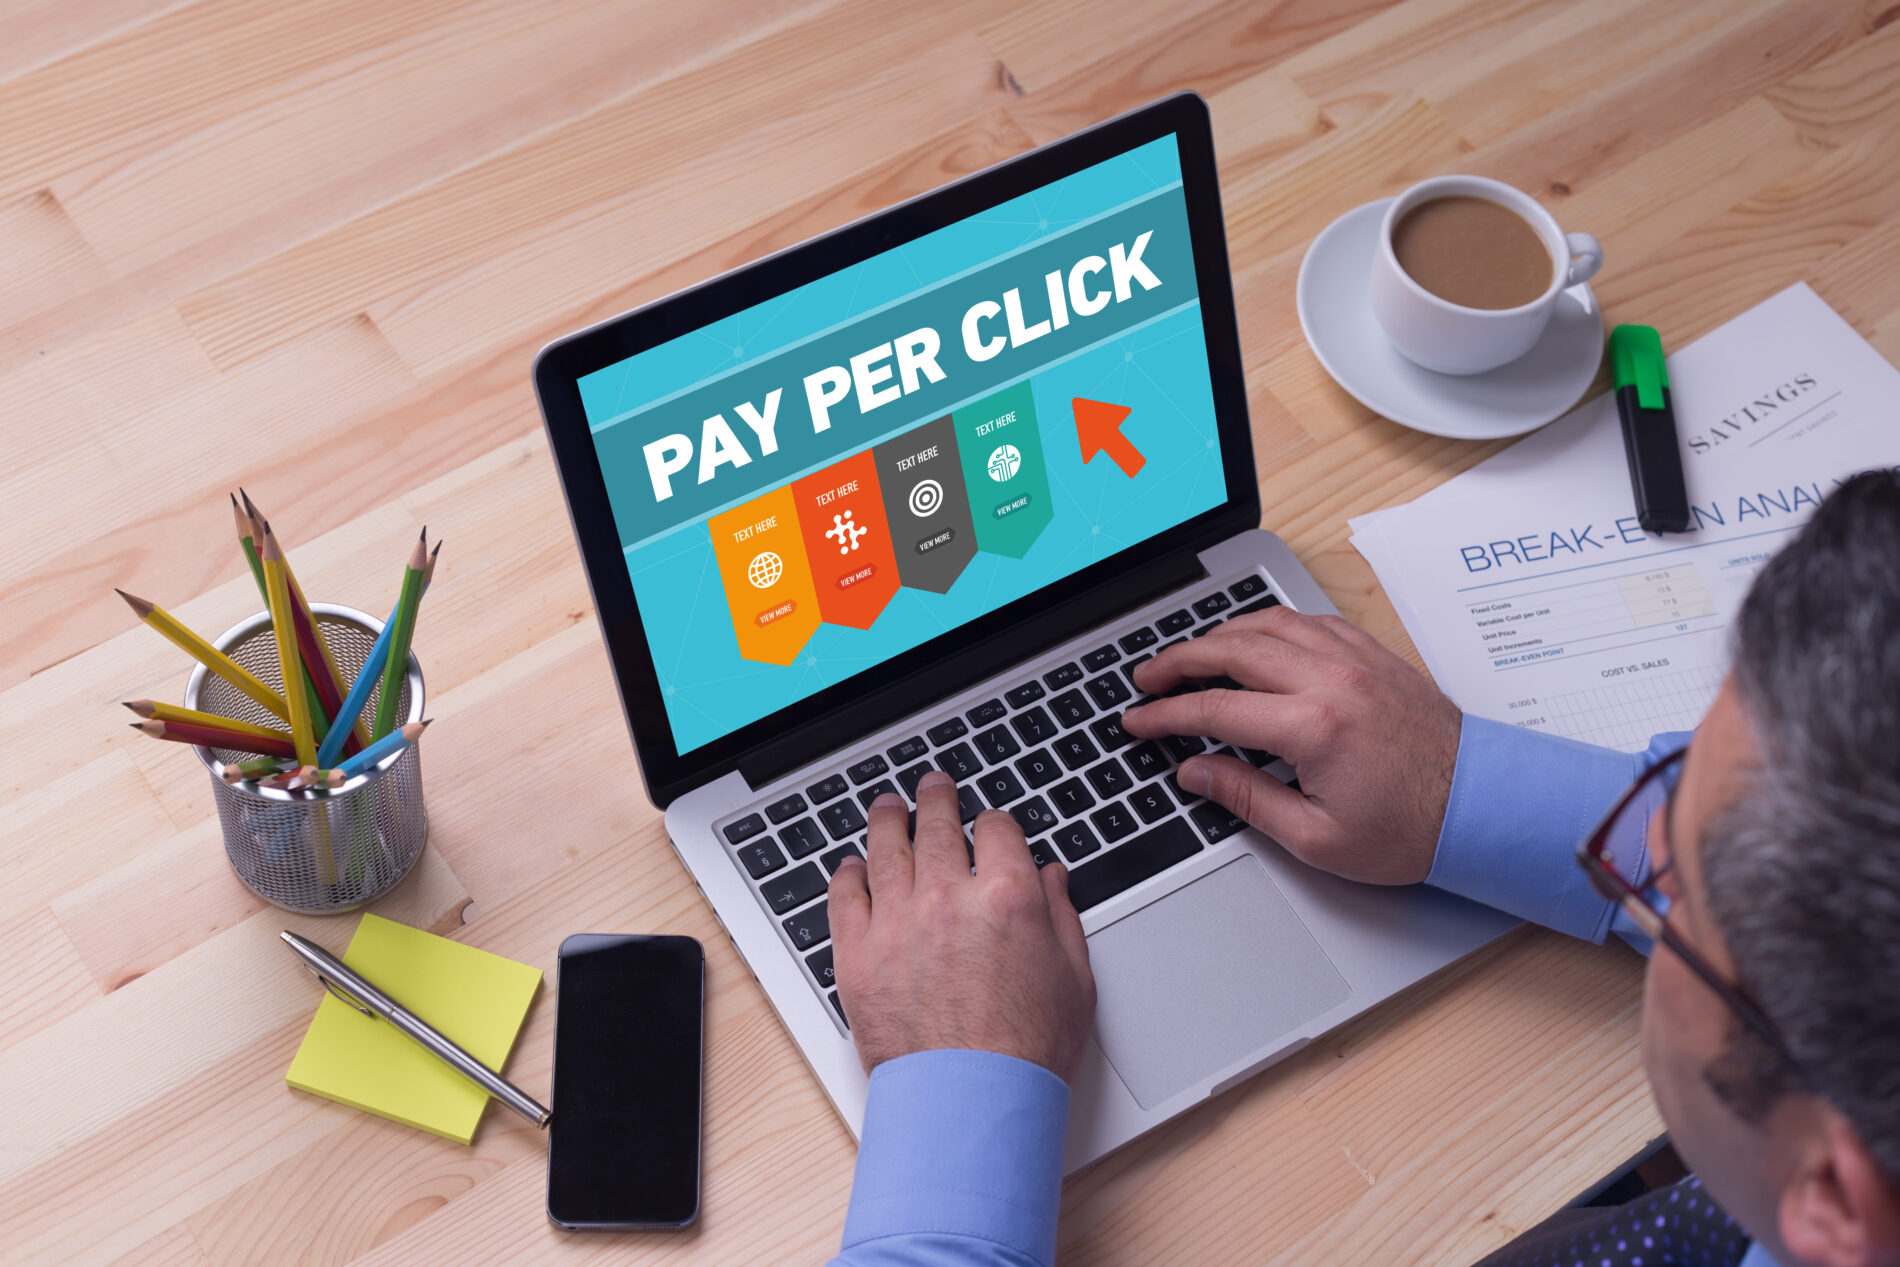 pay per click plan on laptop